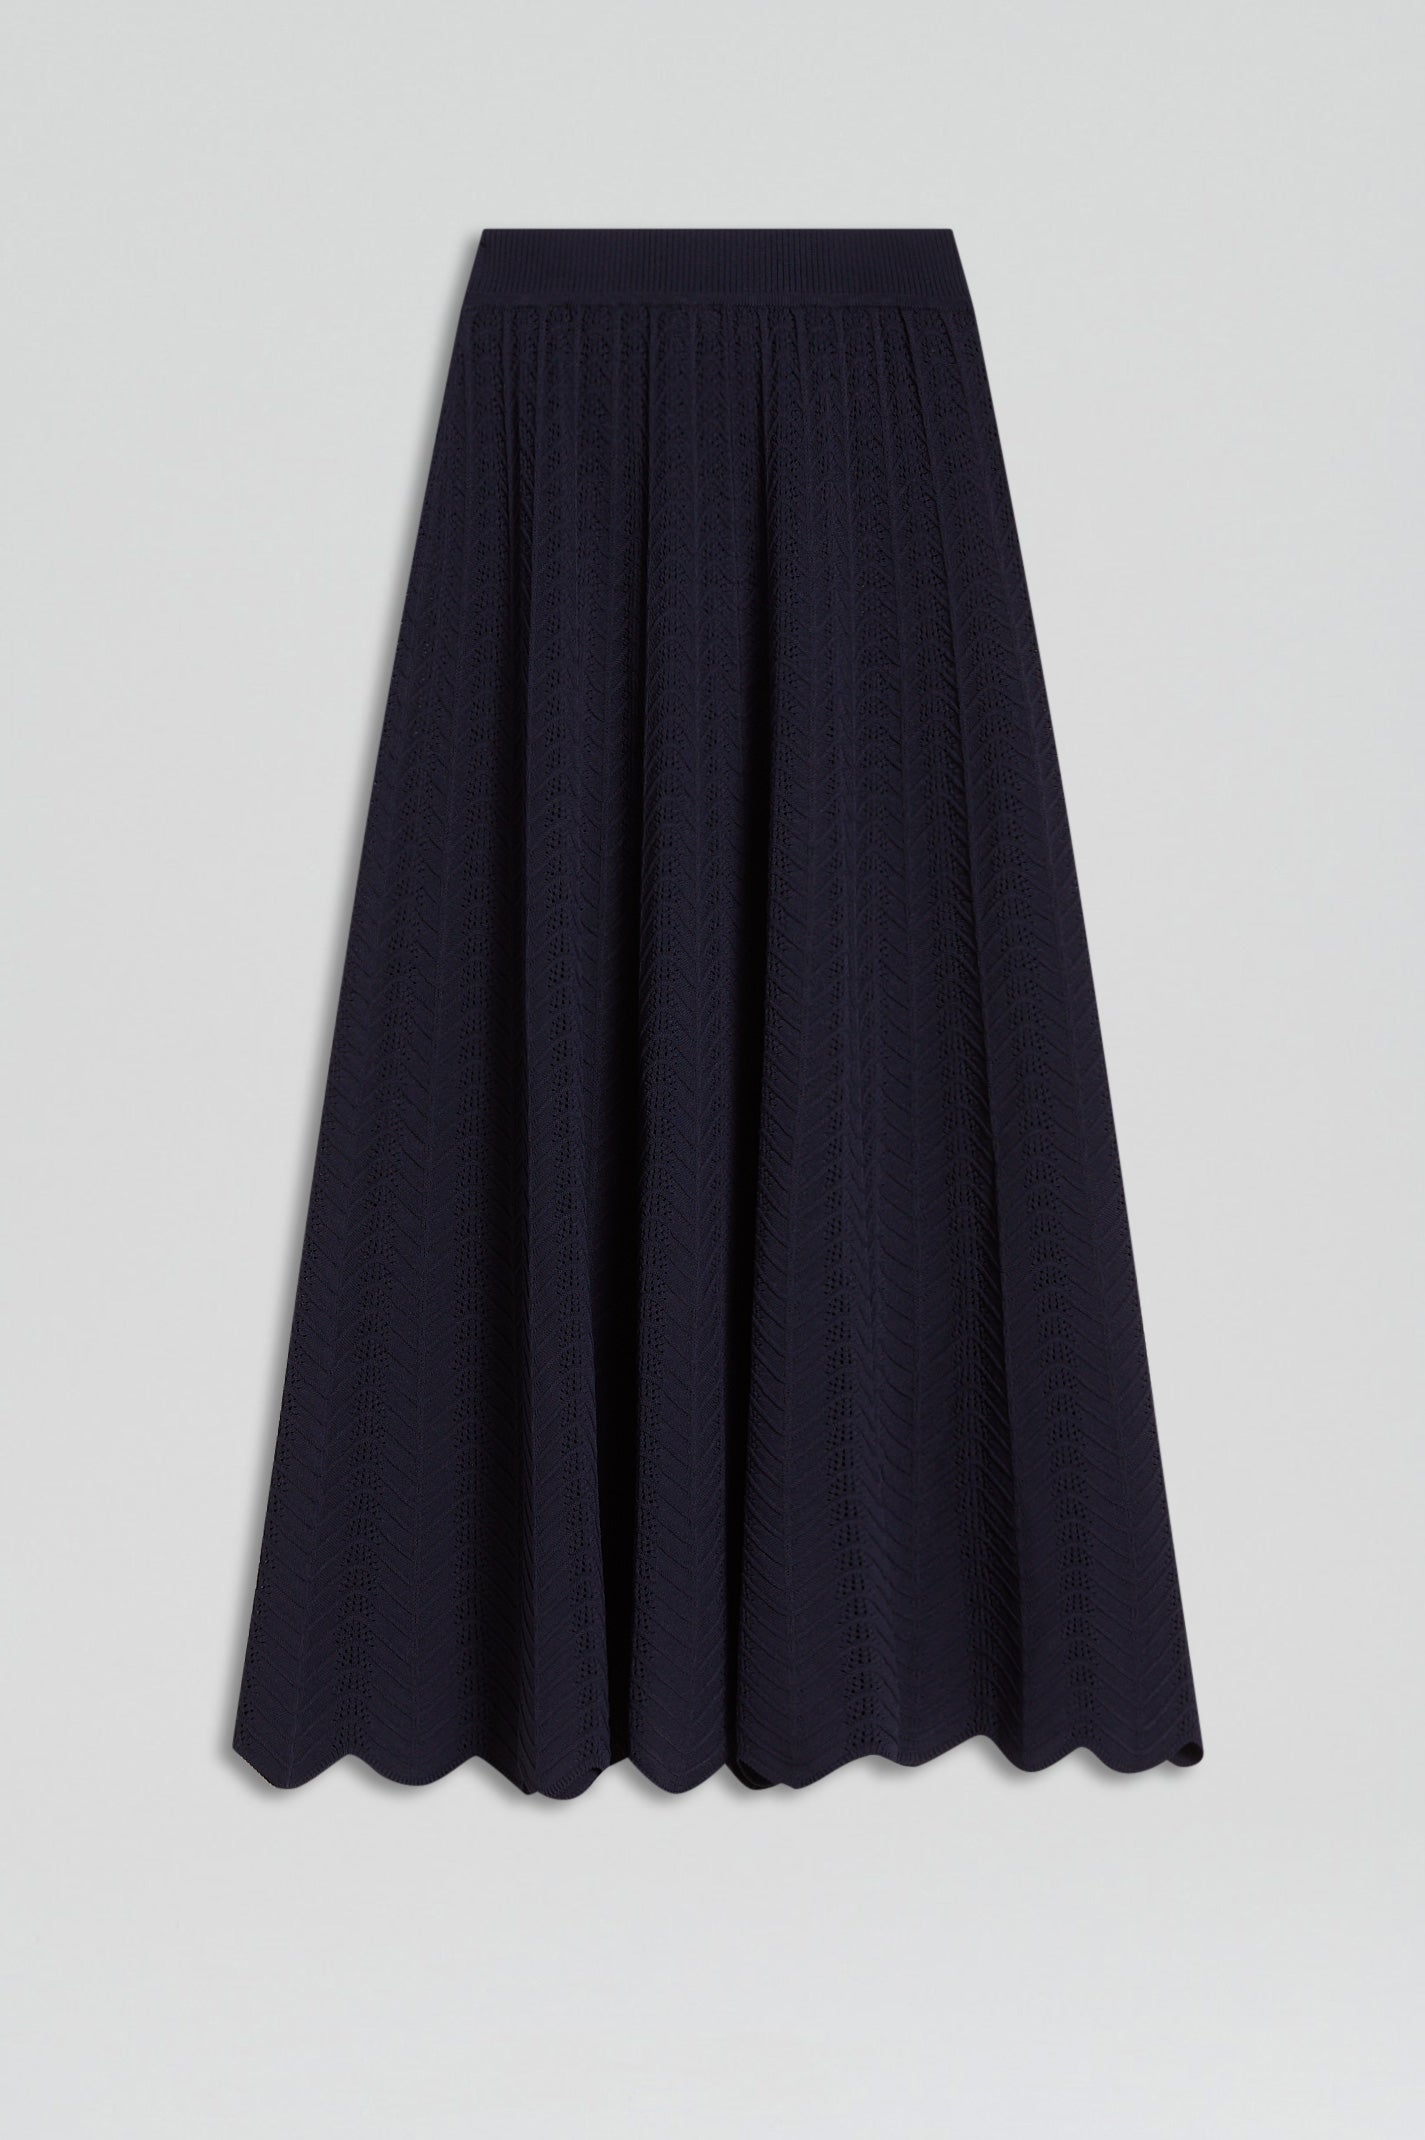 Pleat lace skirt – navy